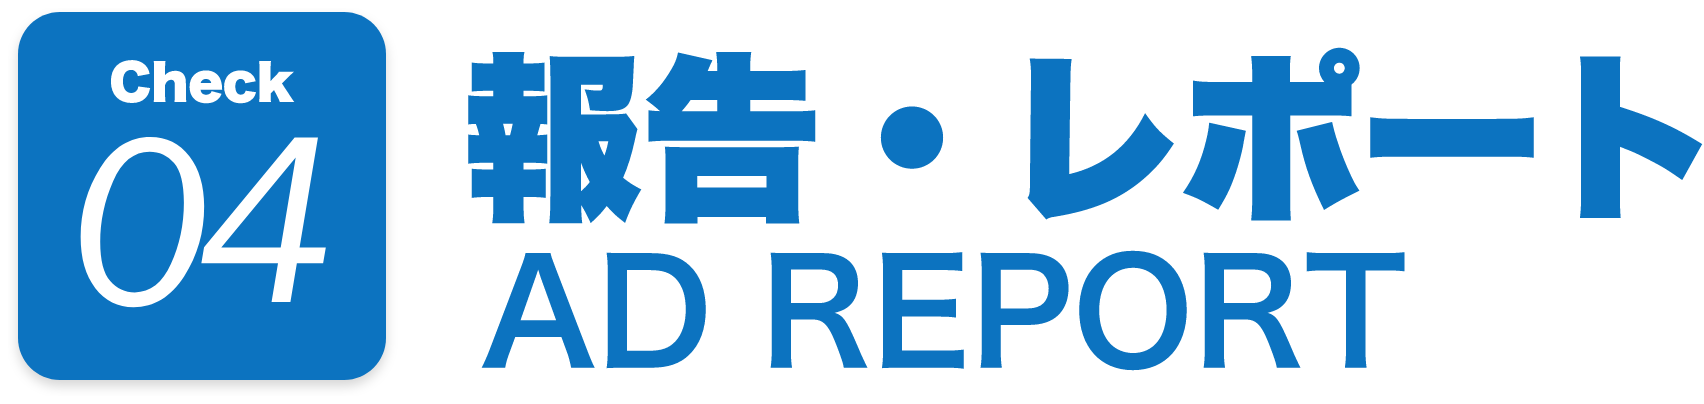 Check04 報告・レポート AD REPORT